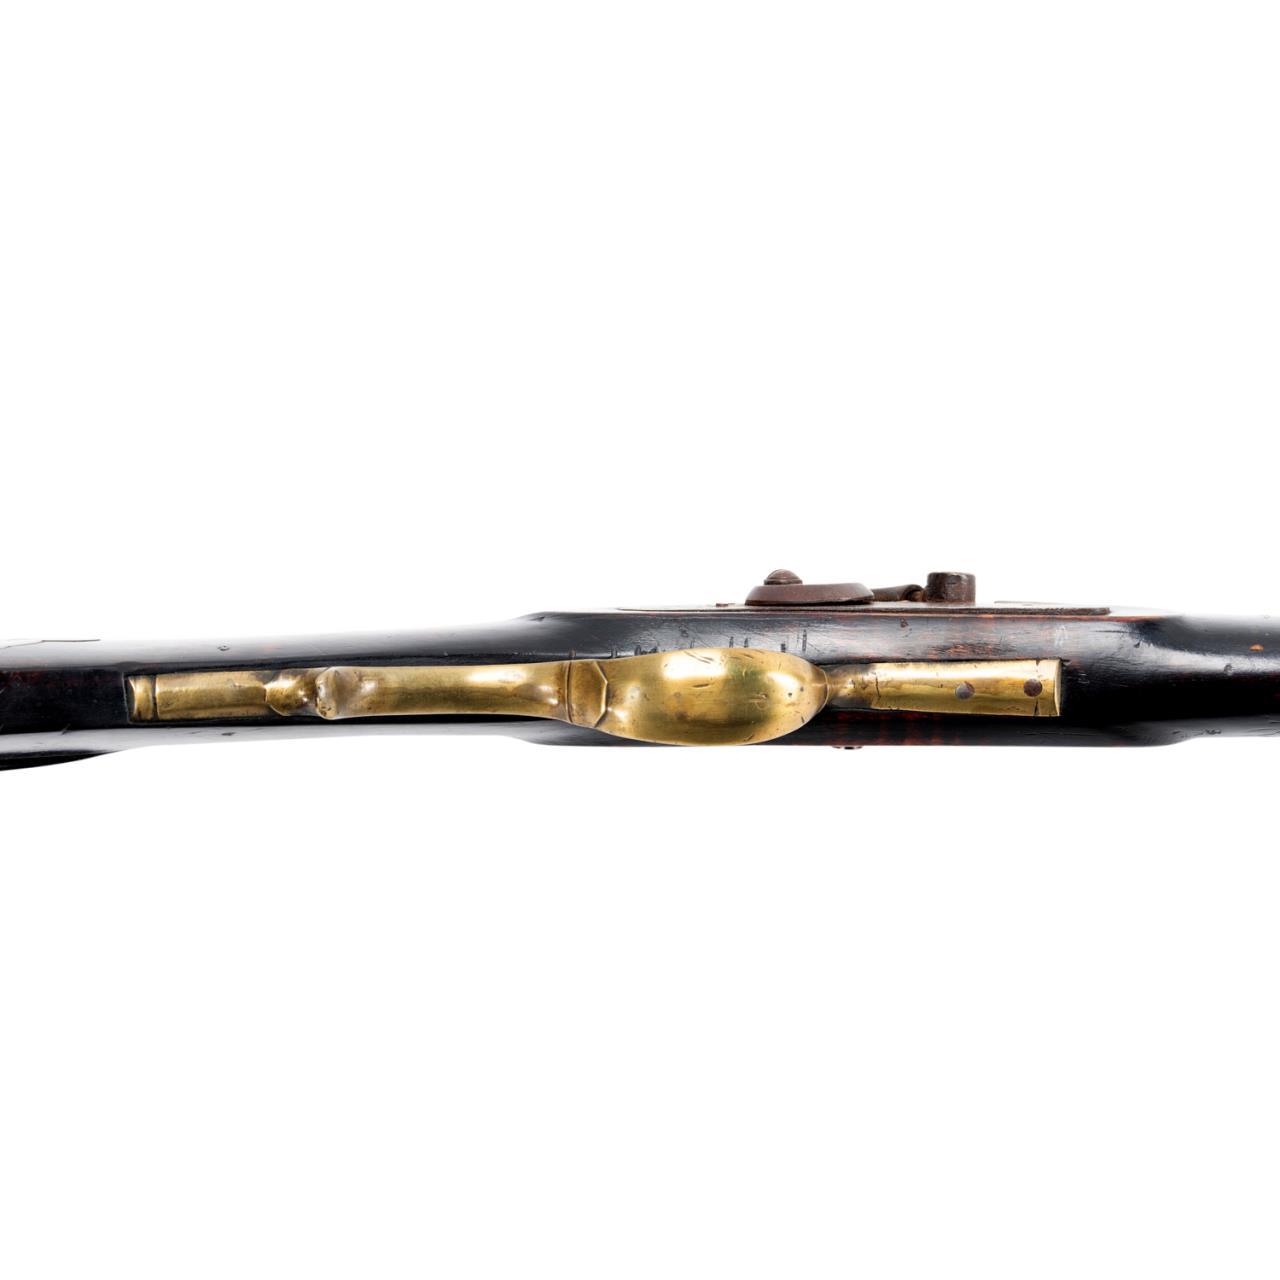 Tiger Maple stock - Amerian Percussion Kentucky Rifle